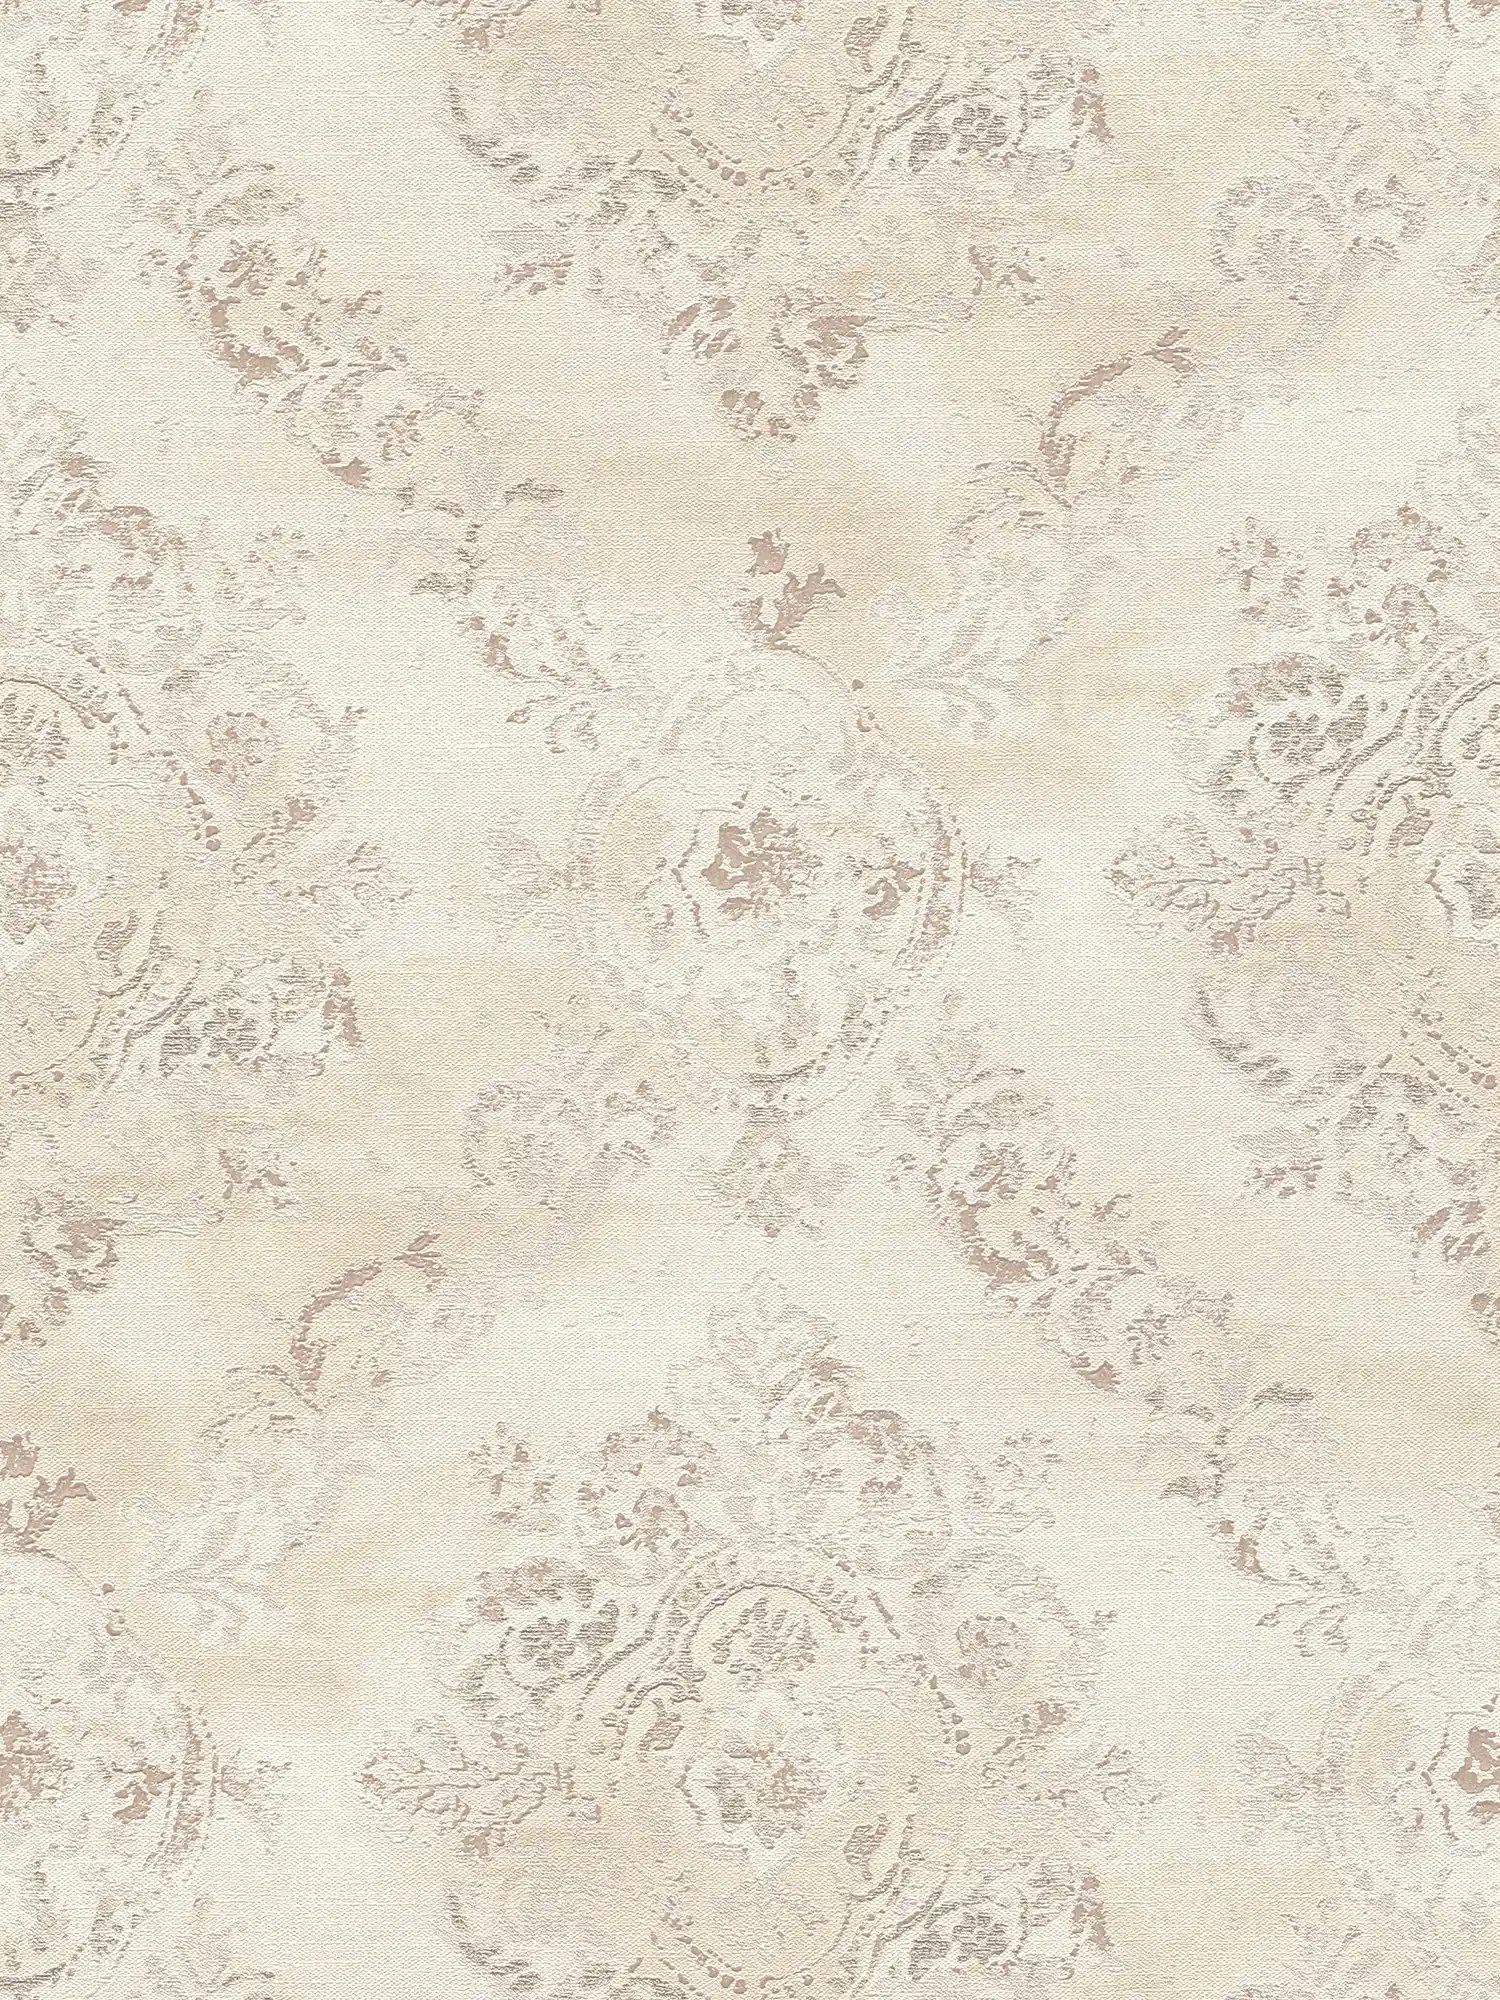 Textielachtig behang met ornamenteel patroon in used look - metallic, crème, beige
